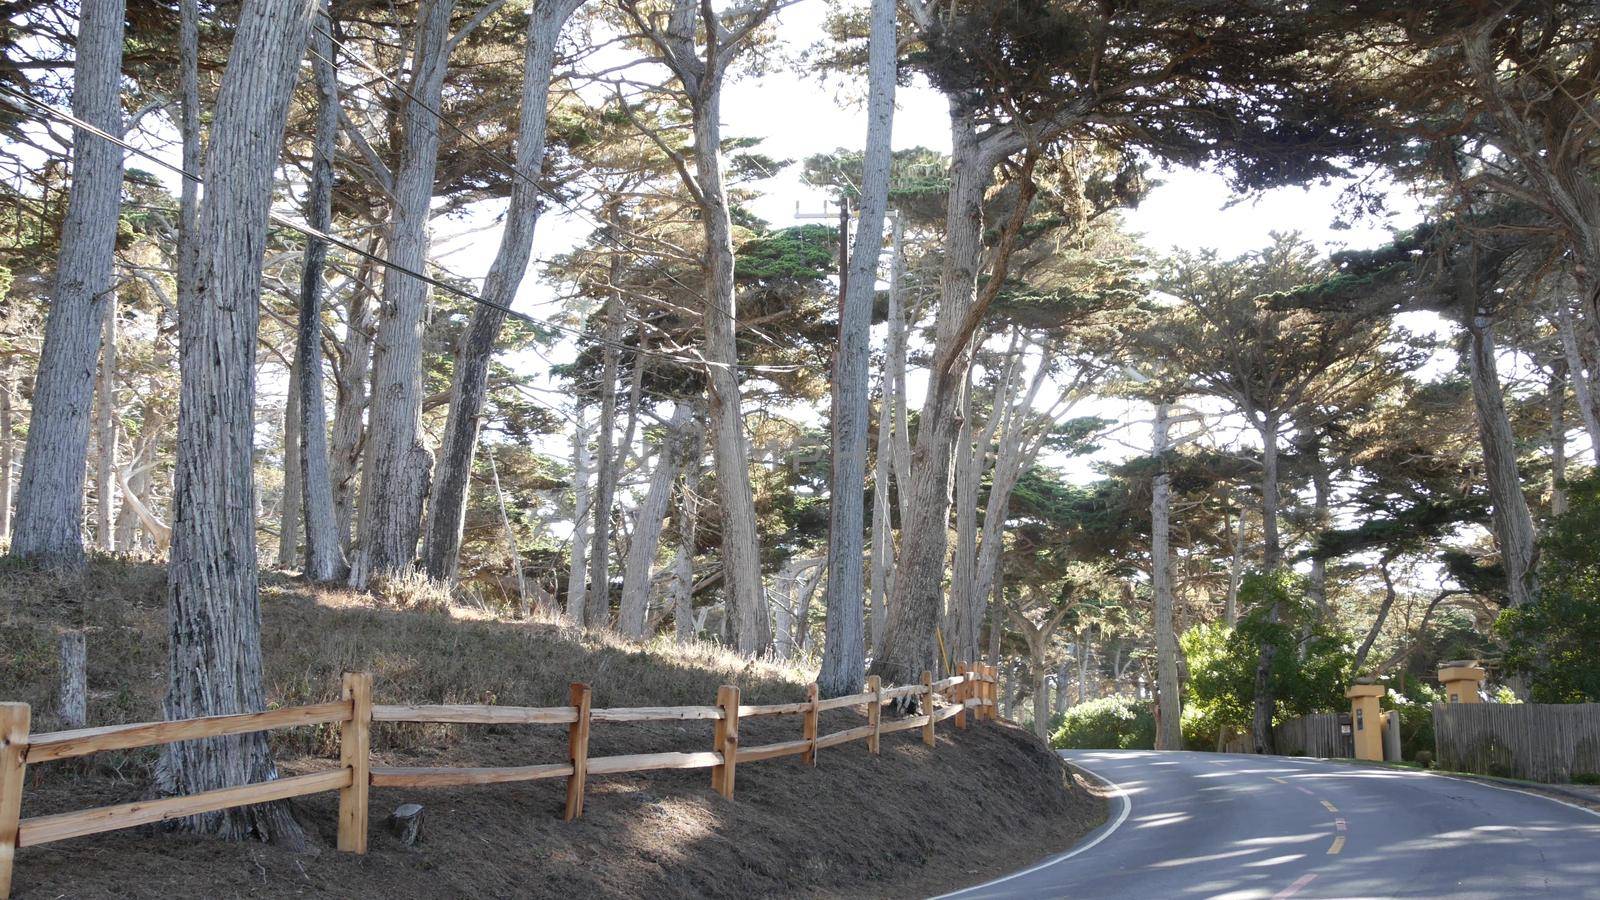 Scenic 17-mile drive, Monterey, California. Road trip thru cypress tree forest. by DogoraSun